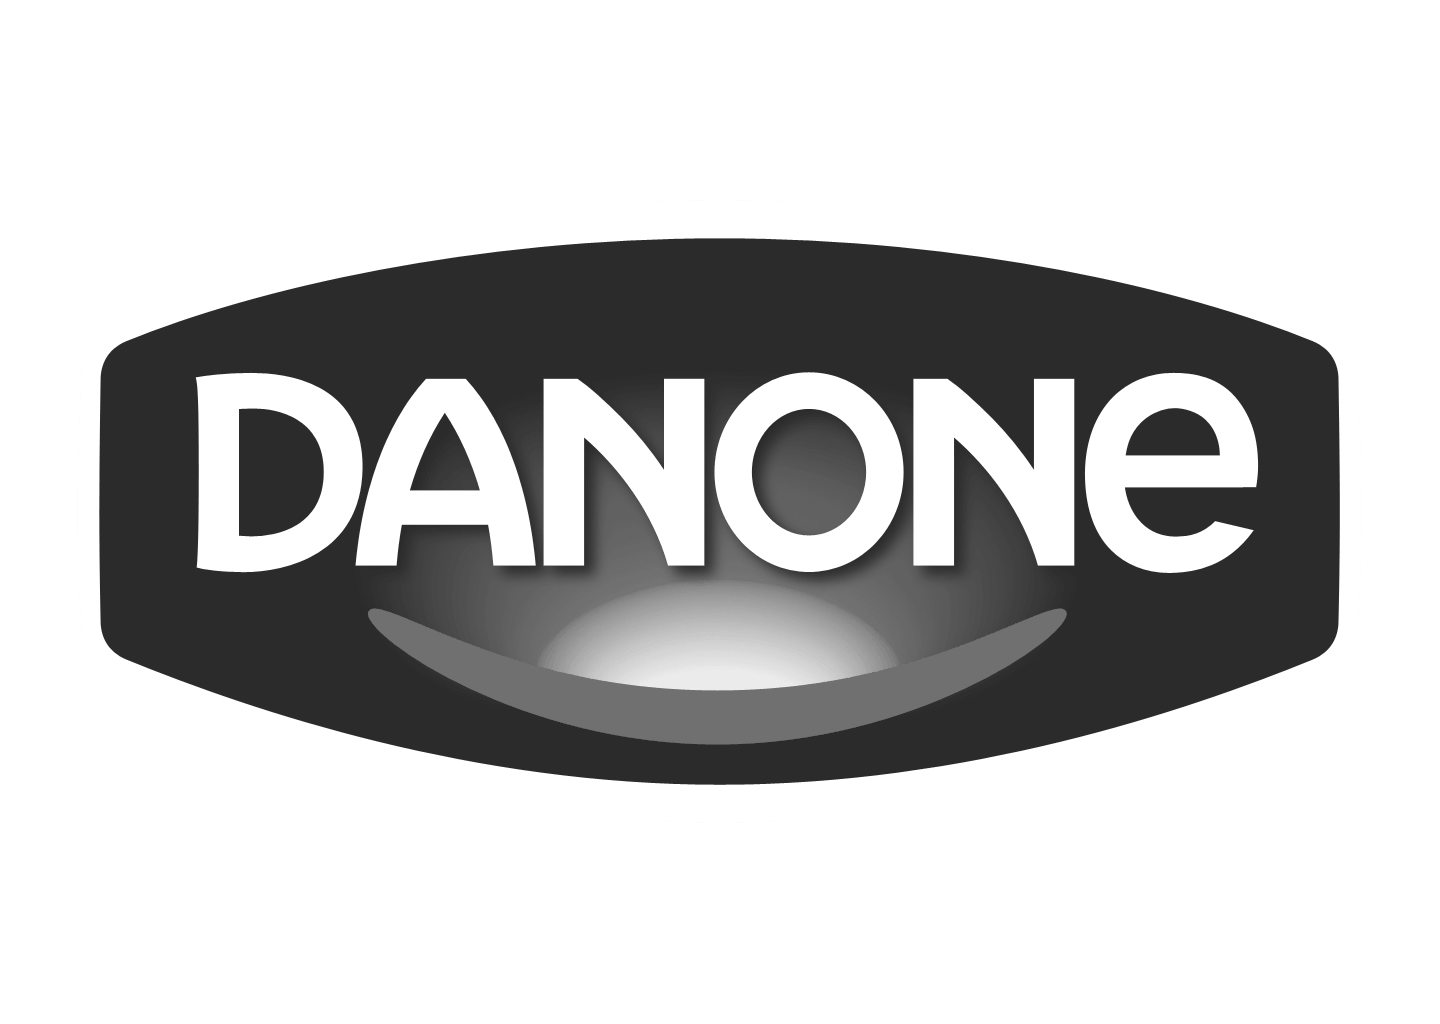 Danone-brand-logo_B&W